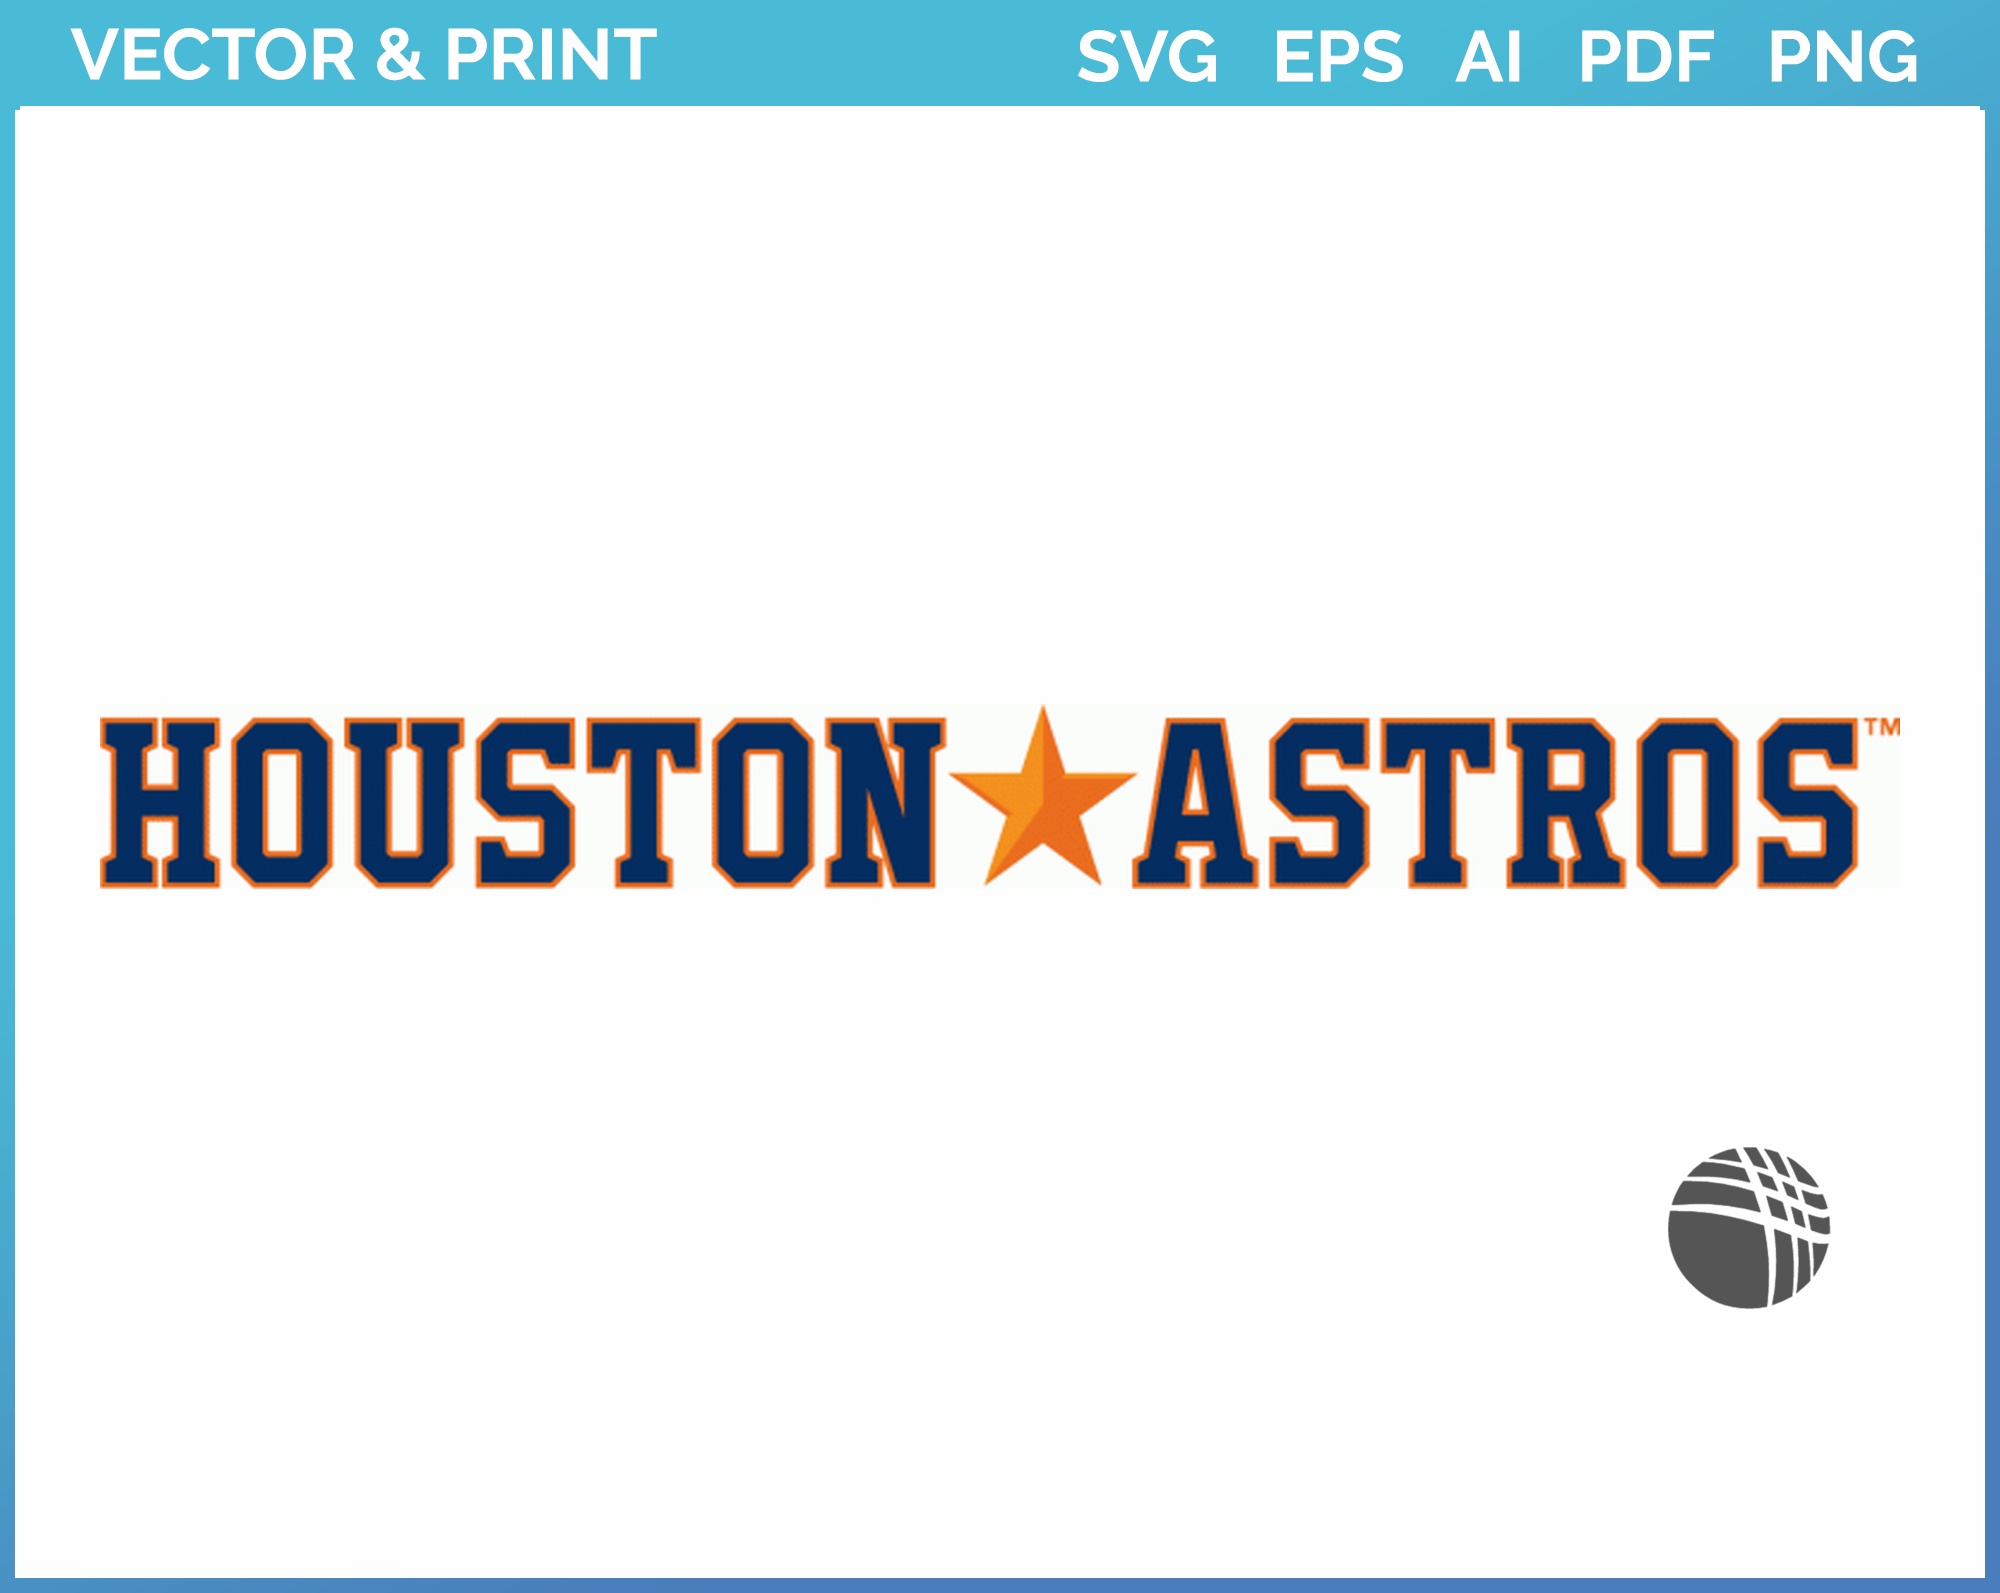 Houston Astros Team SVG, Baseball Astros Star Logo